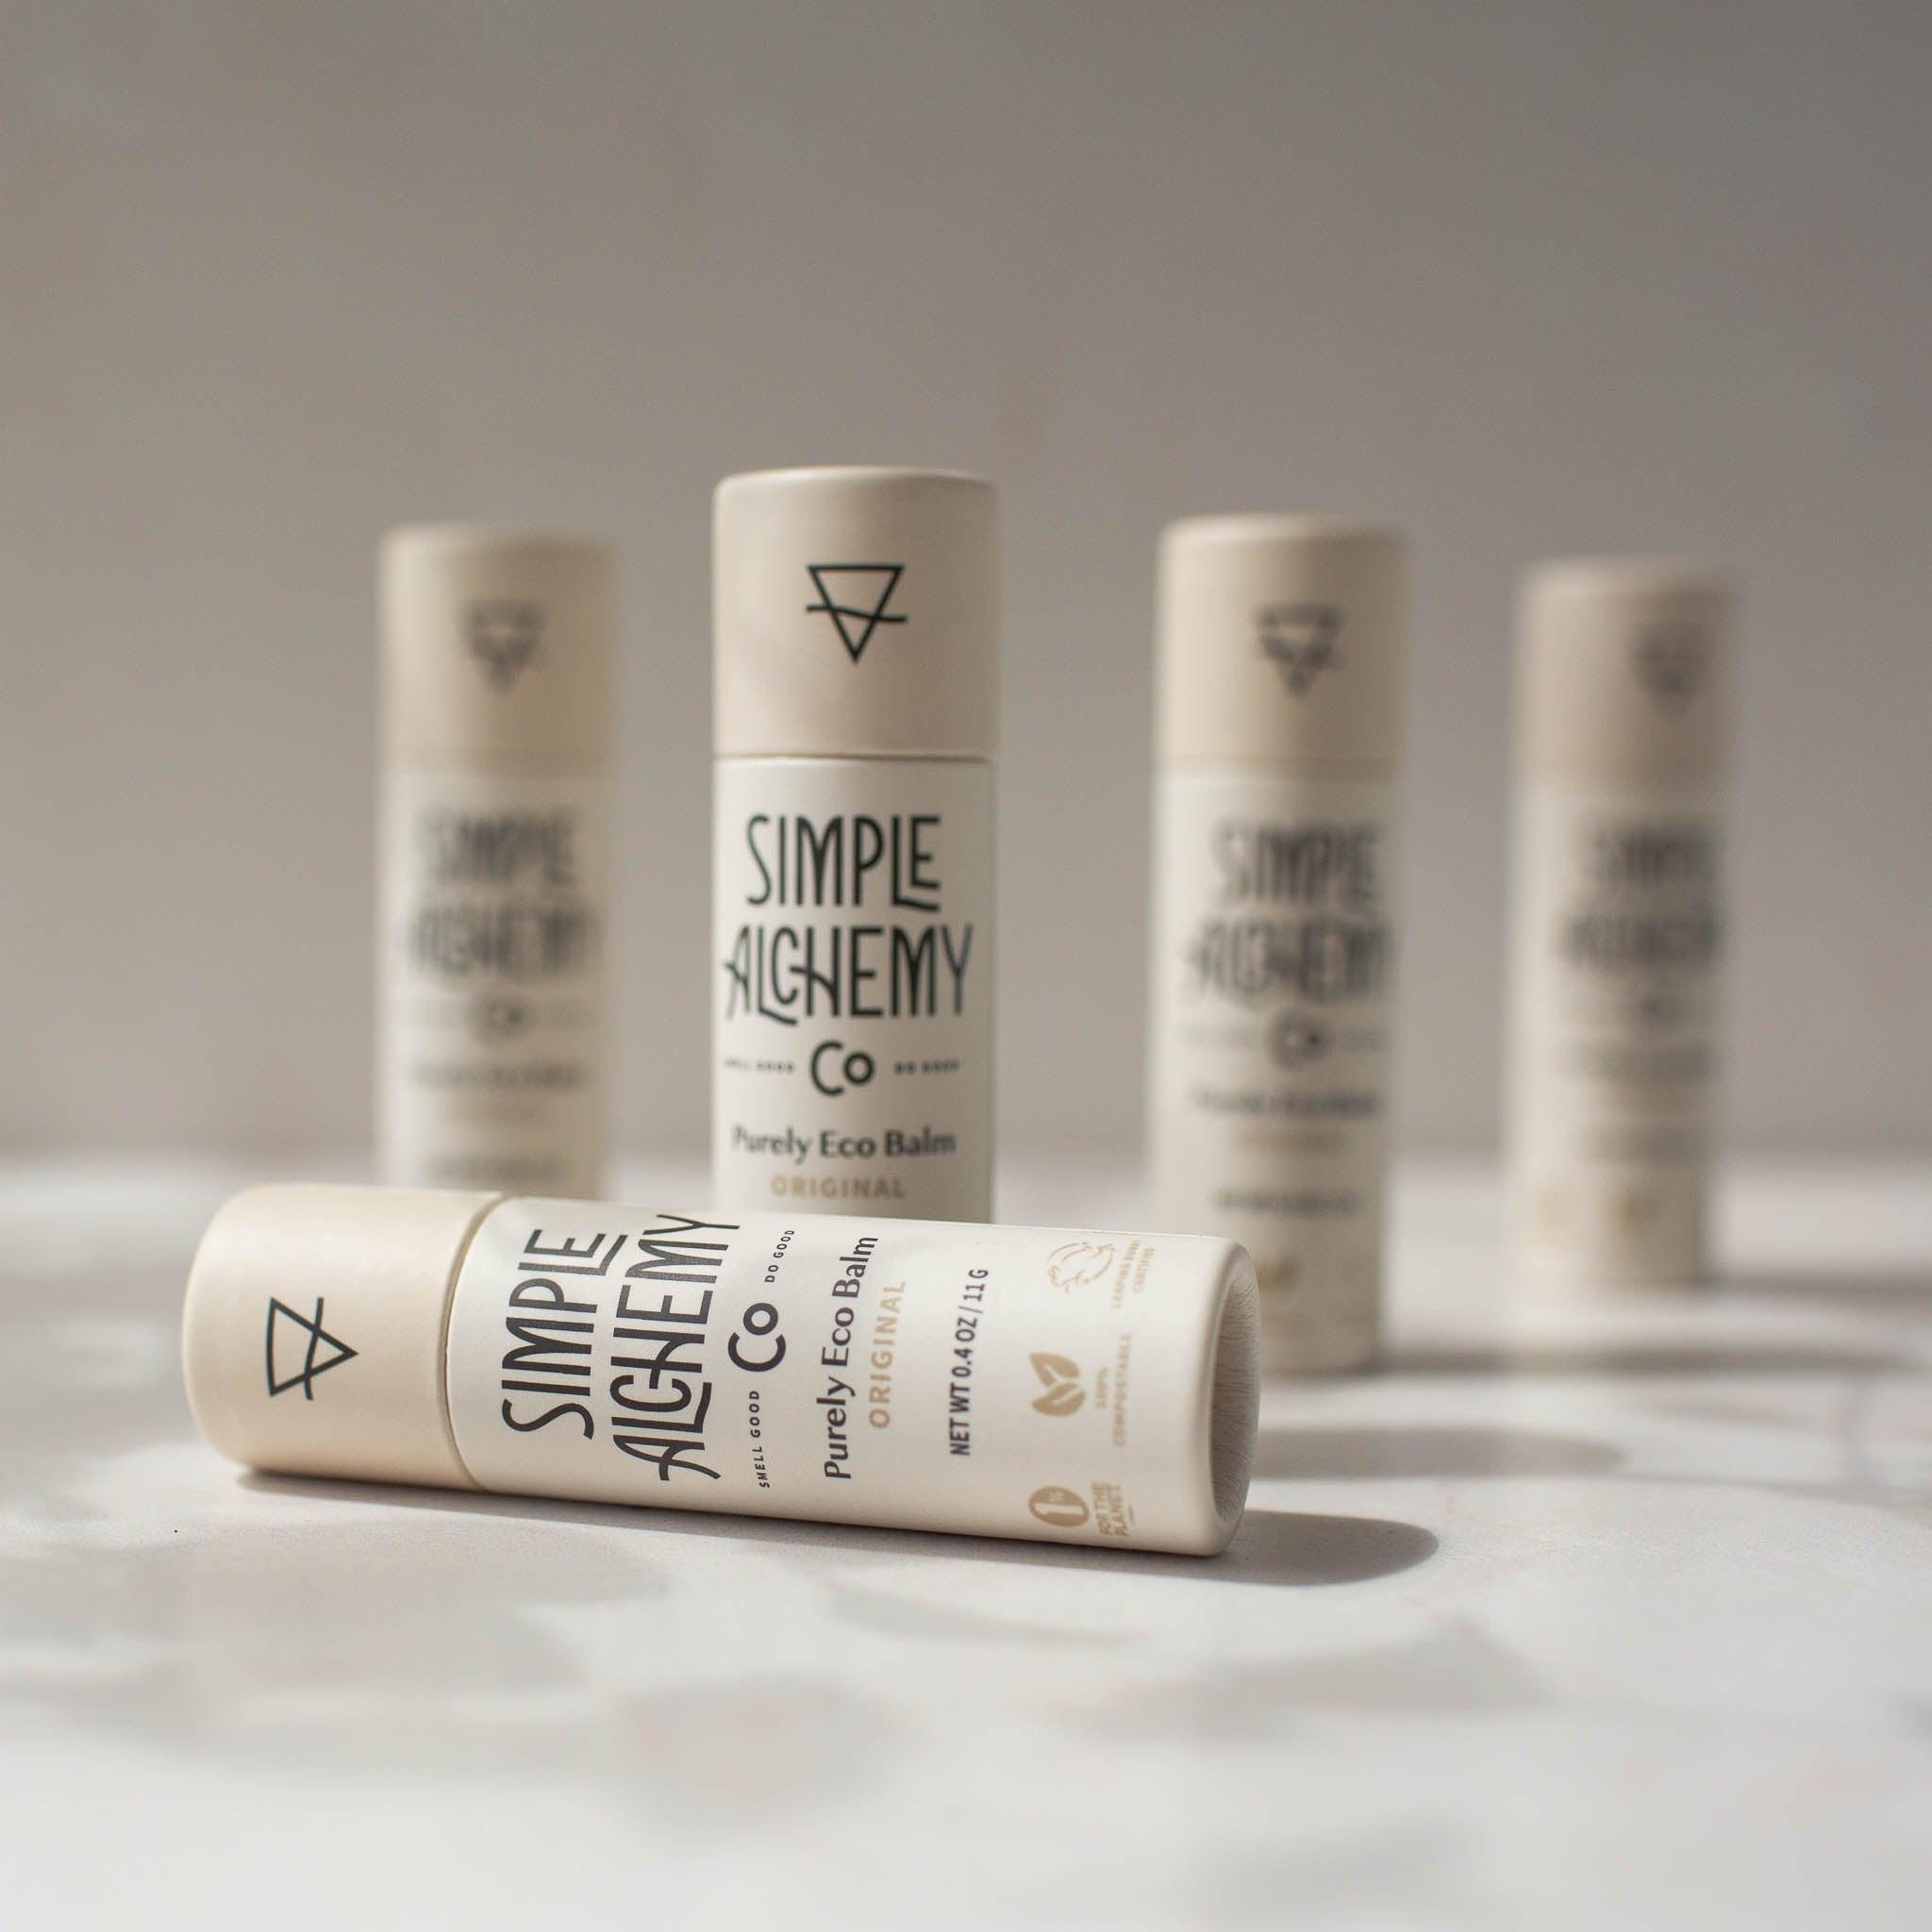 Off-white compostable paper tubes of original vegan lip balm.